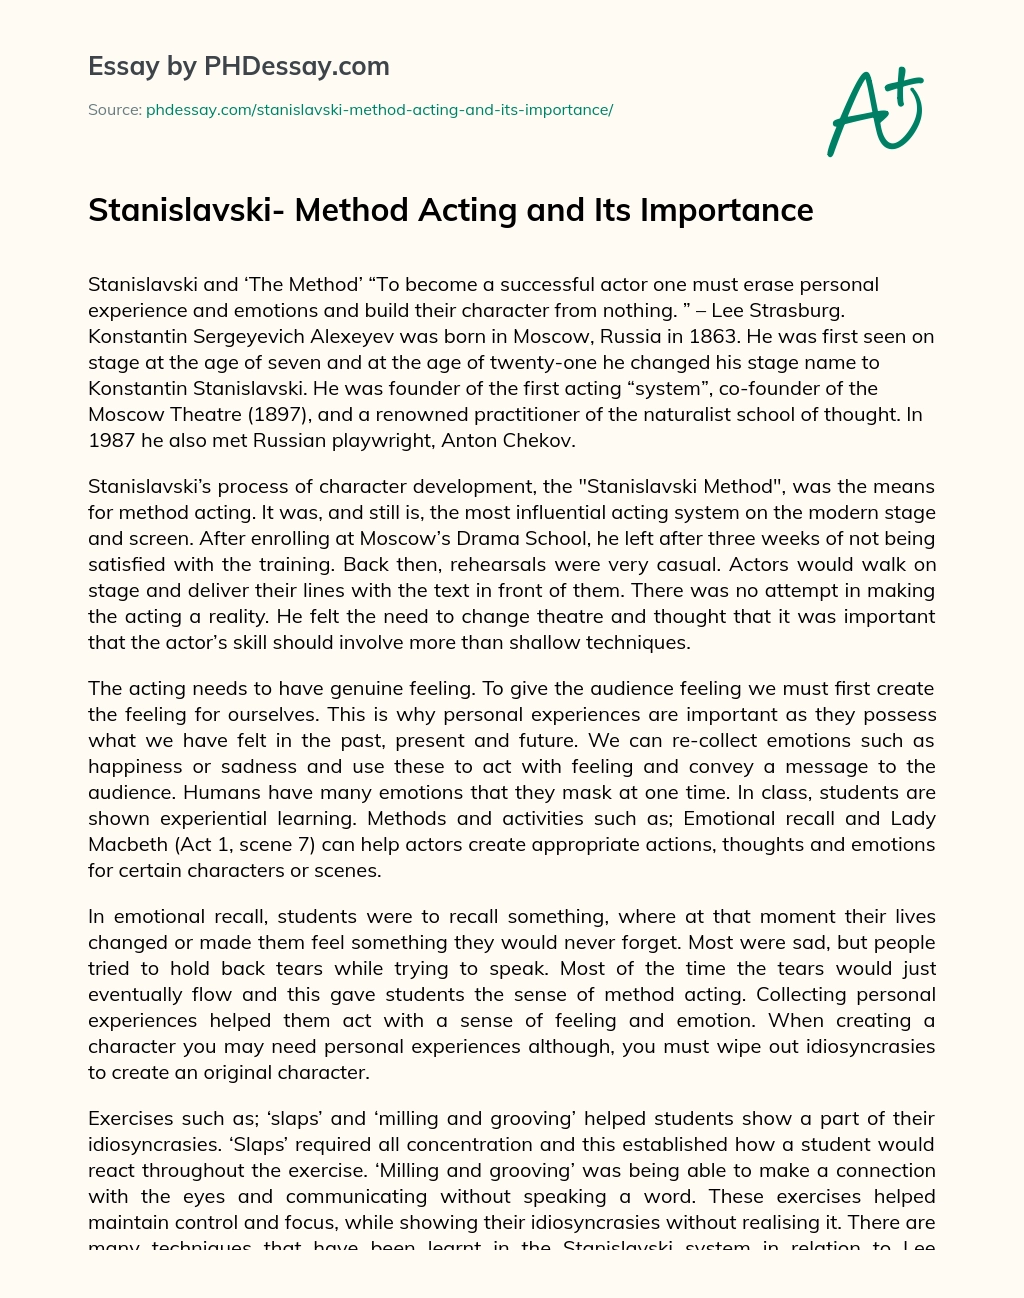 Stanislavski- Method Acting and Its Importance essay